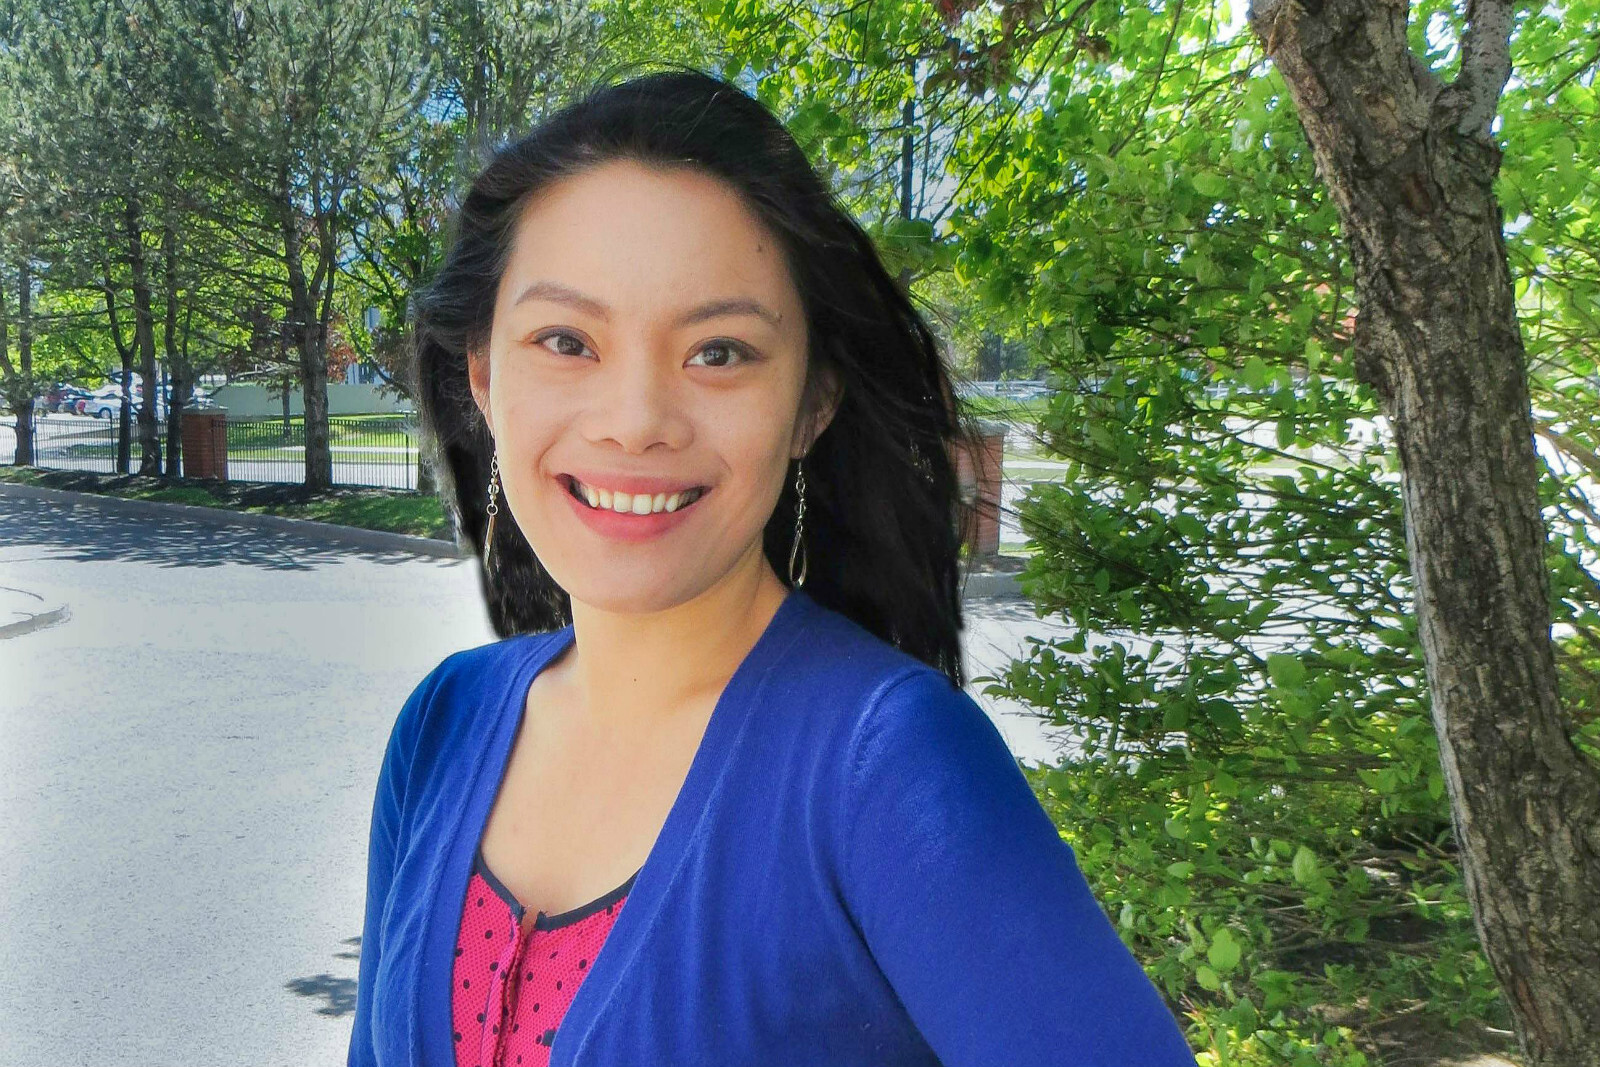 Fourth year medical student Lisa Liang